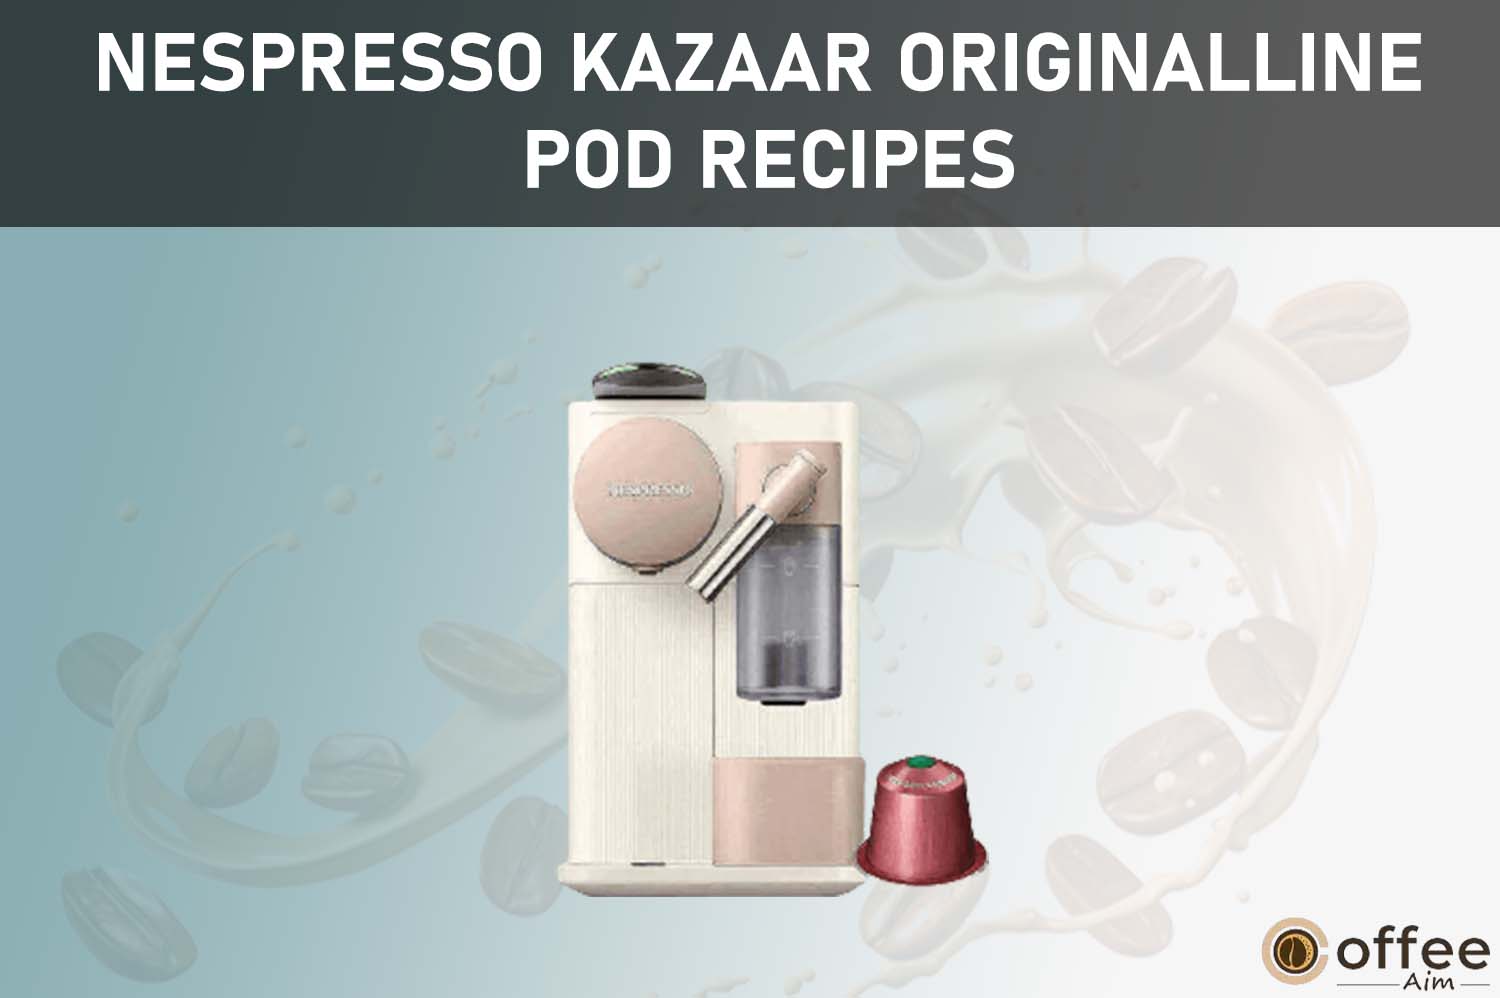 Featured image for the article "Nespresso Kazaar OriginalLine Pod Recipes"